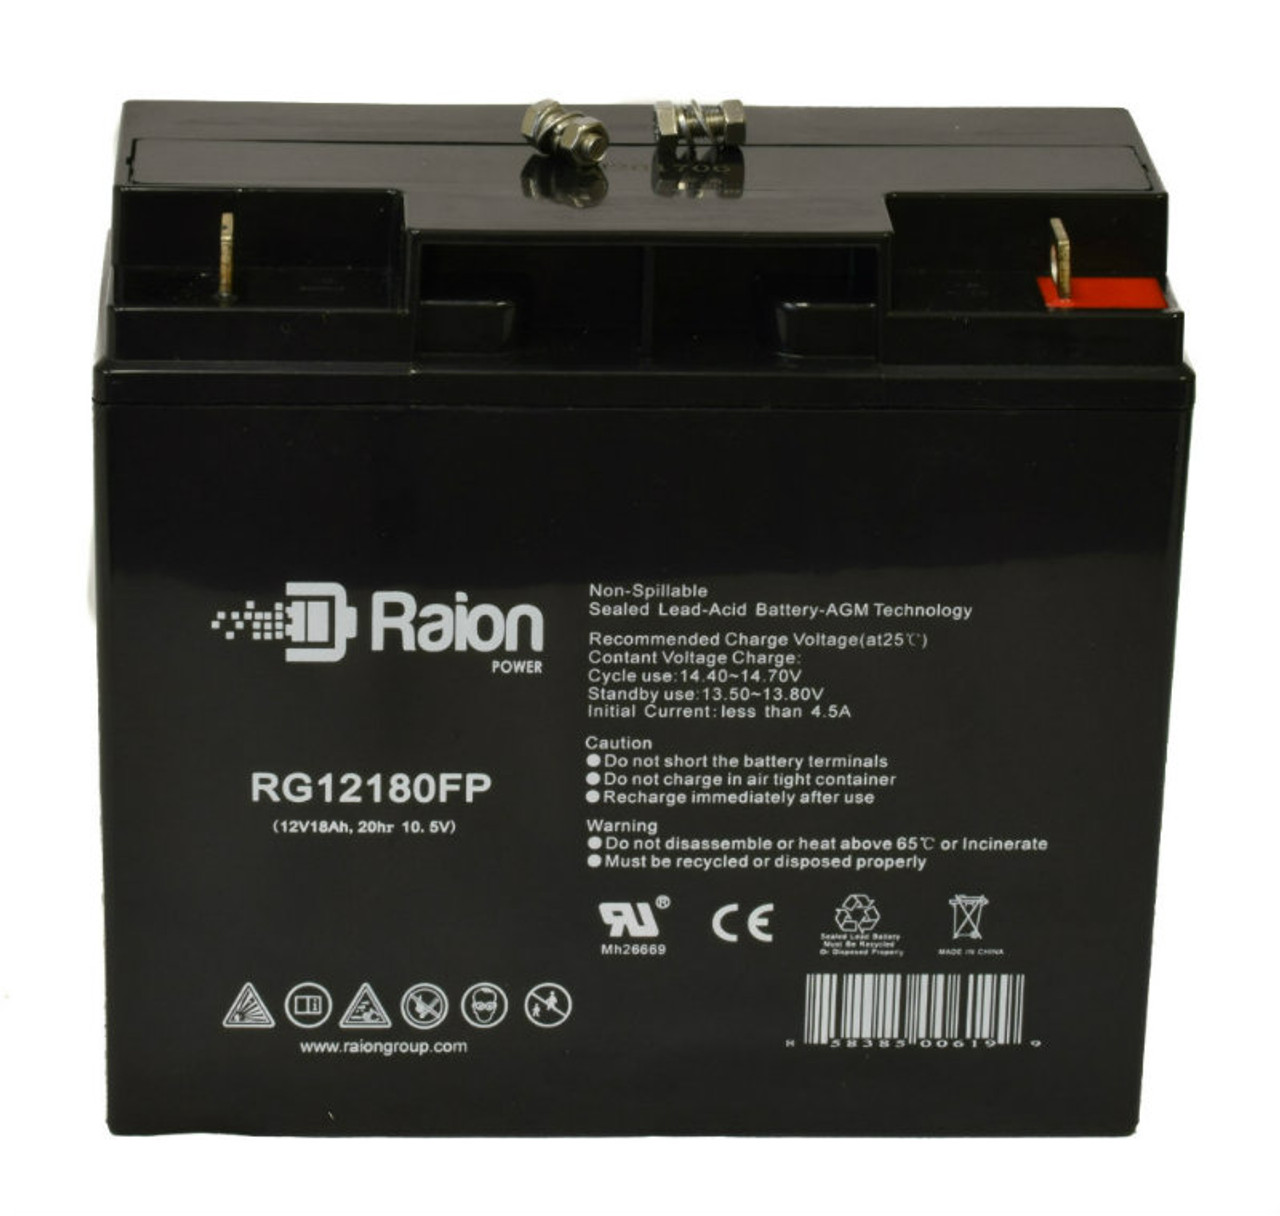 Raion Power RG12180FP 12V 18Ah Lead Acid Battery for Rhino SLA 17-12